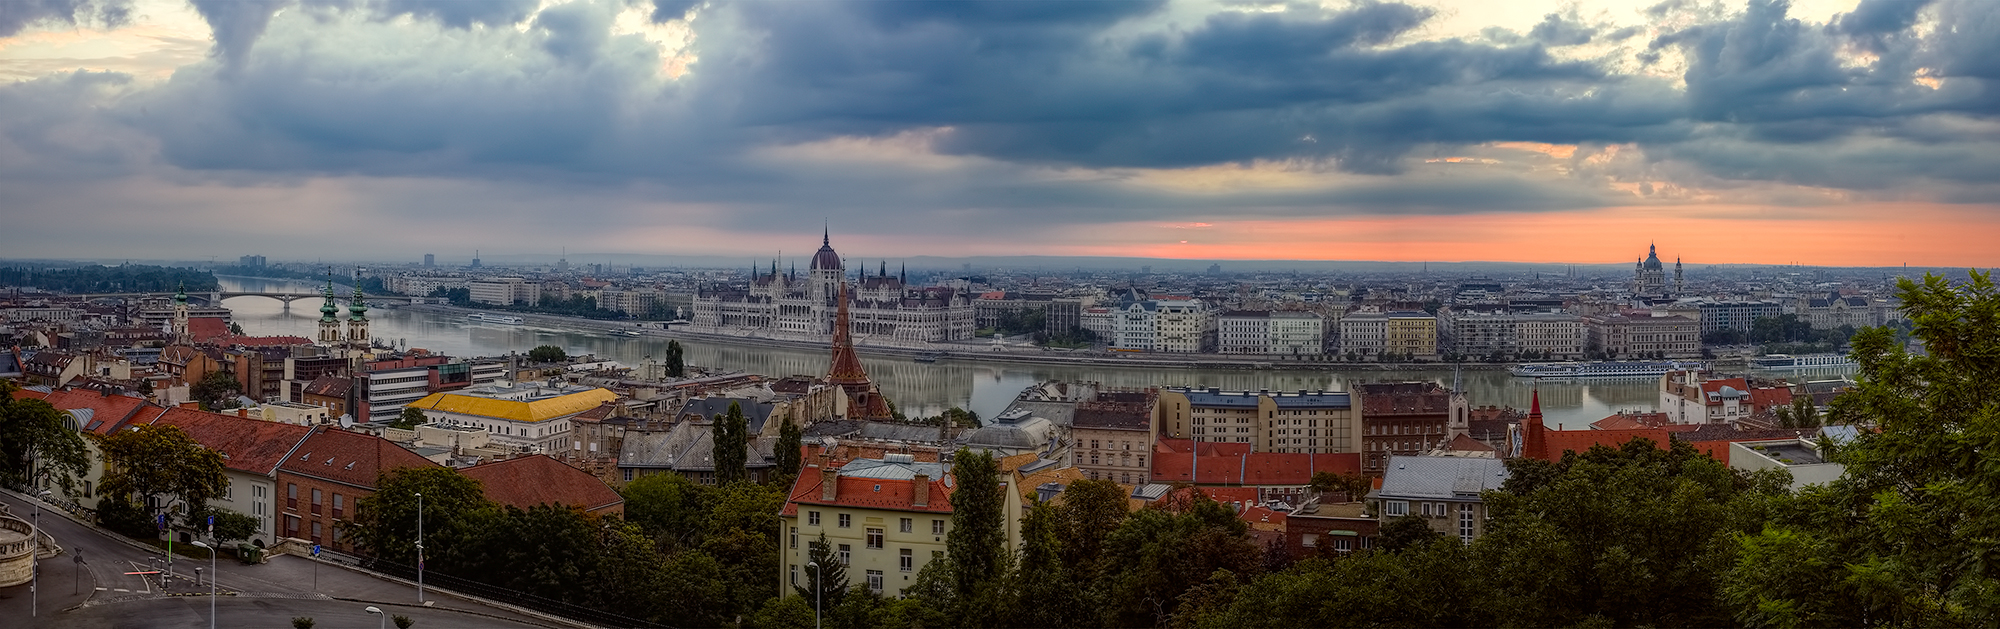 2016 - View from Fishermans Bastion (Halaszbastya), Budapest - Hungary (Panorama)